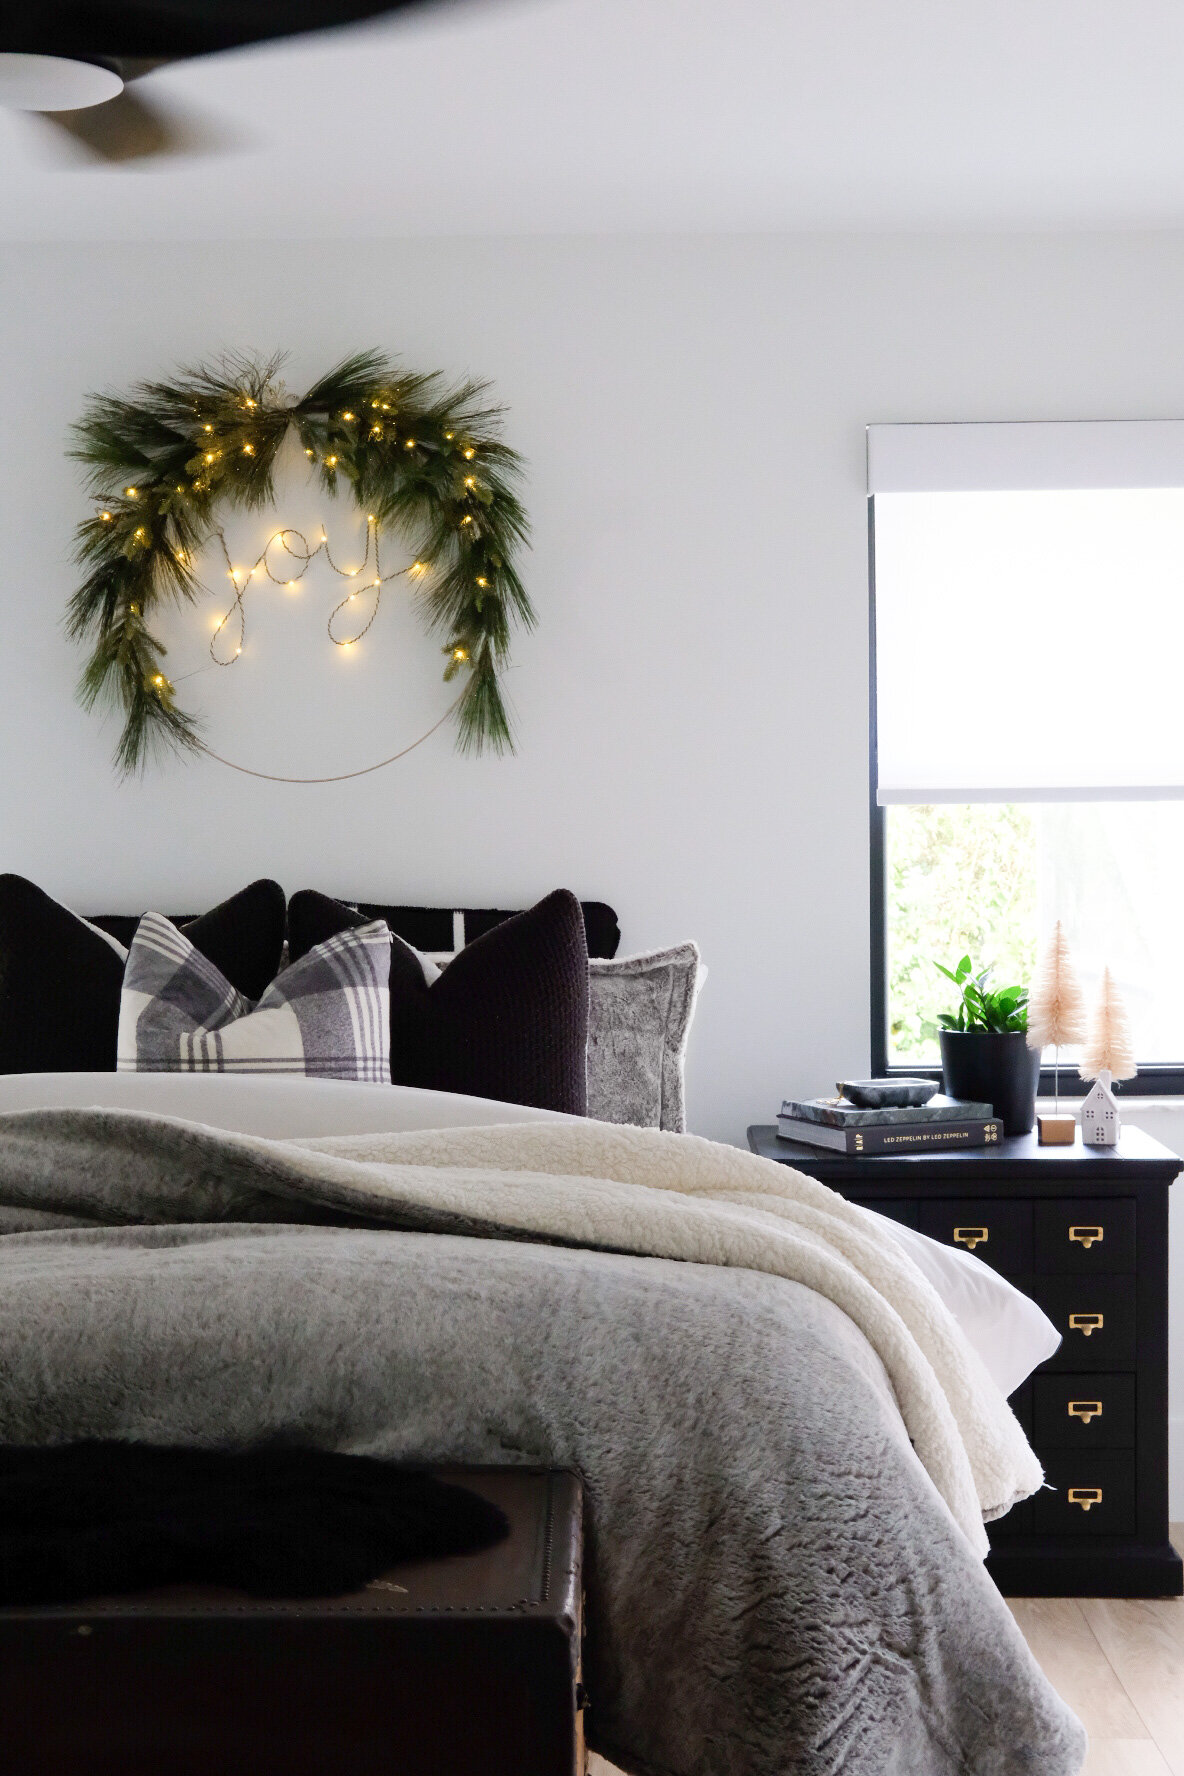 https://images.squarespace-cdn.com/content/v1/5449a23fe4b04f35b928c028/1604972679172-6DSTCZE9YWEJ6RNI4FLH/Me+%26+Mr.+Jones+Christmas+decor+2020.++Joy+lit+wreath+from+Target.++Faux+fur+comforter%2C+black+and+white+neutral+bedding.++Black+and+white+bedroom.